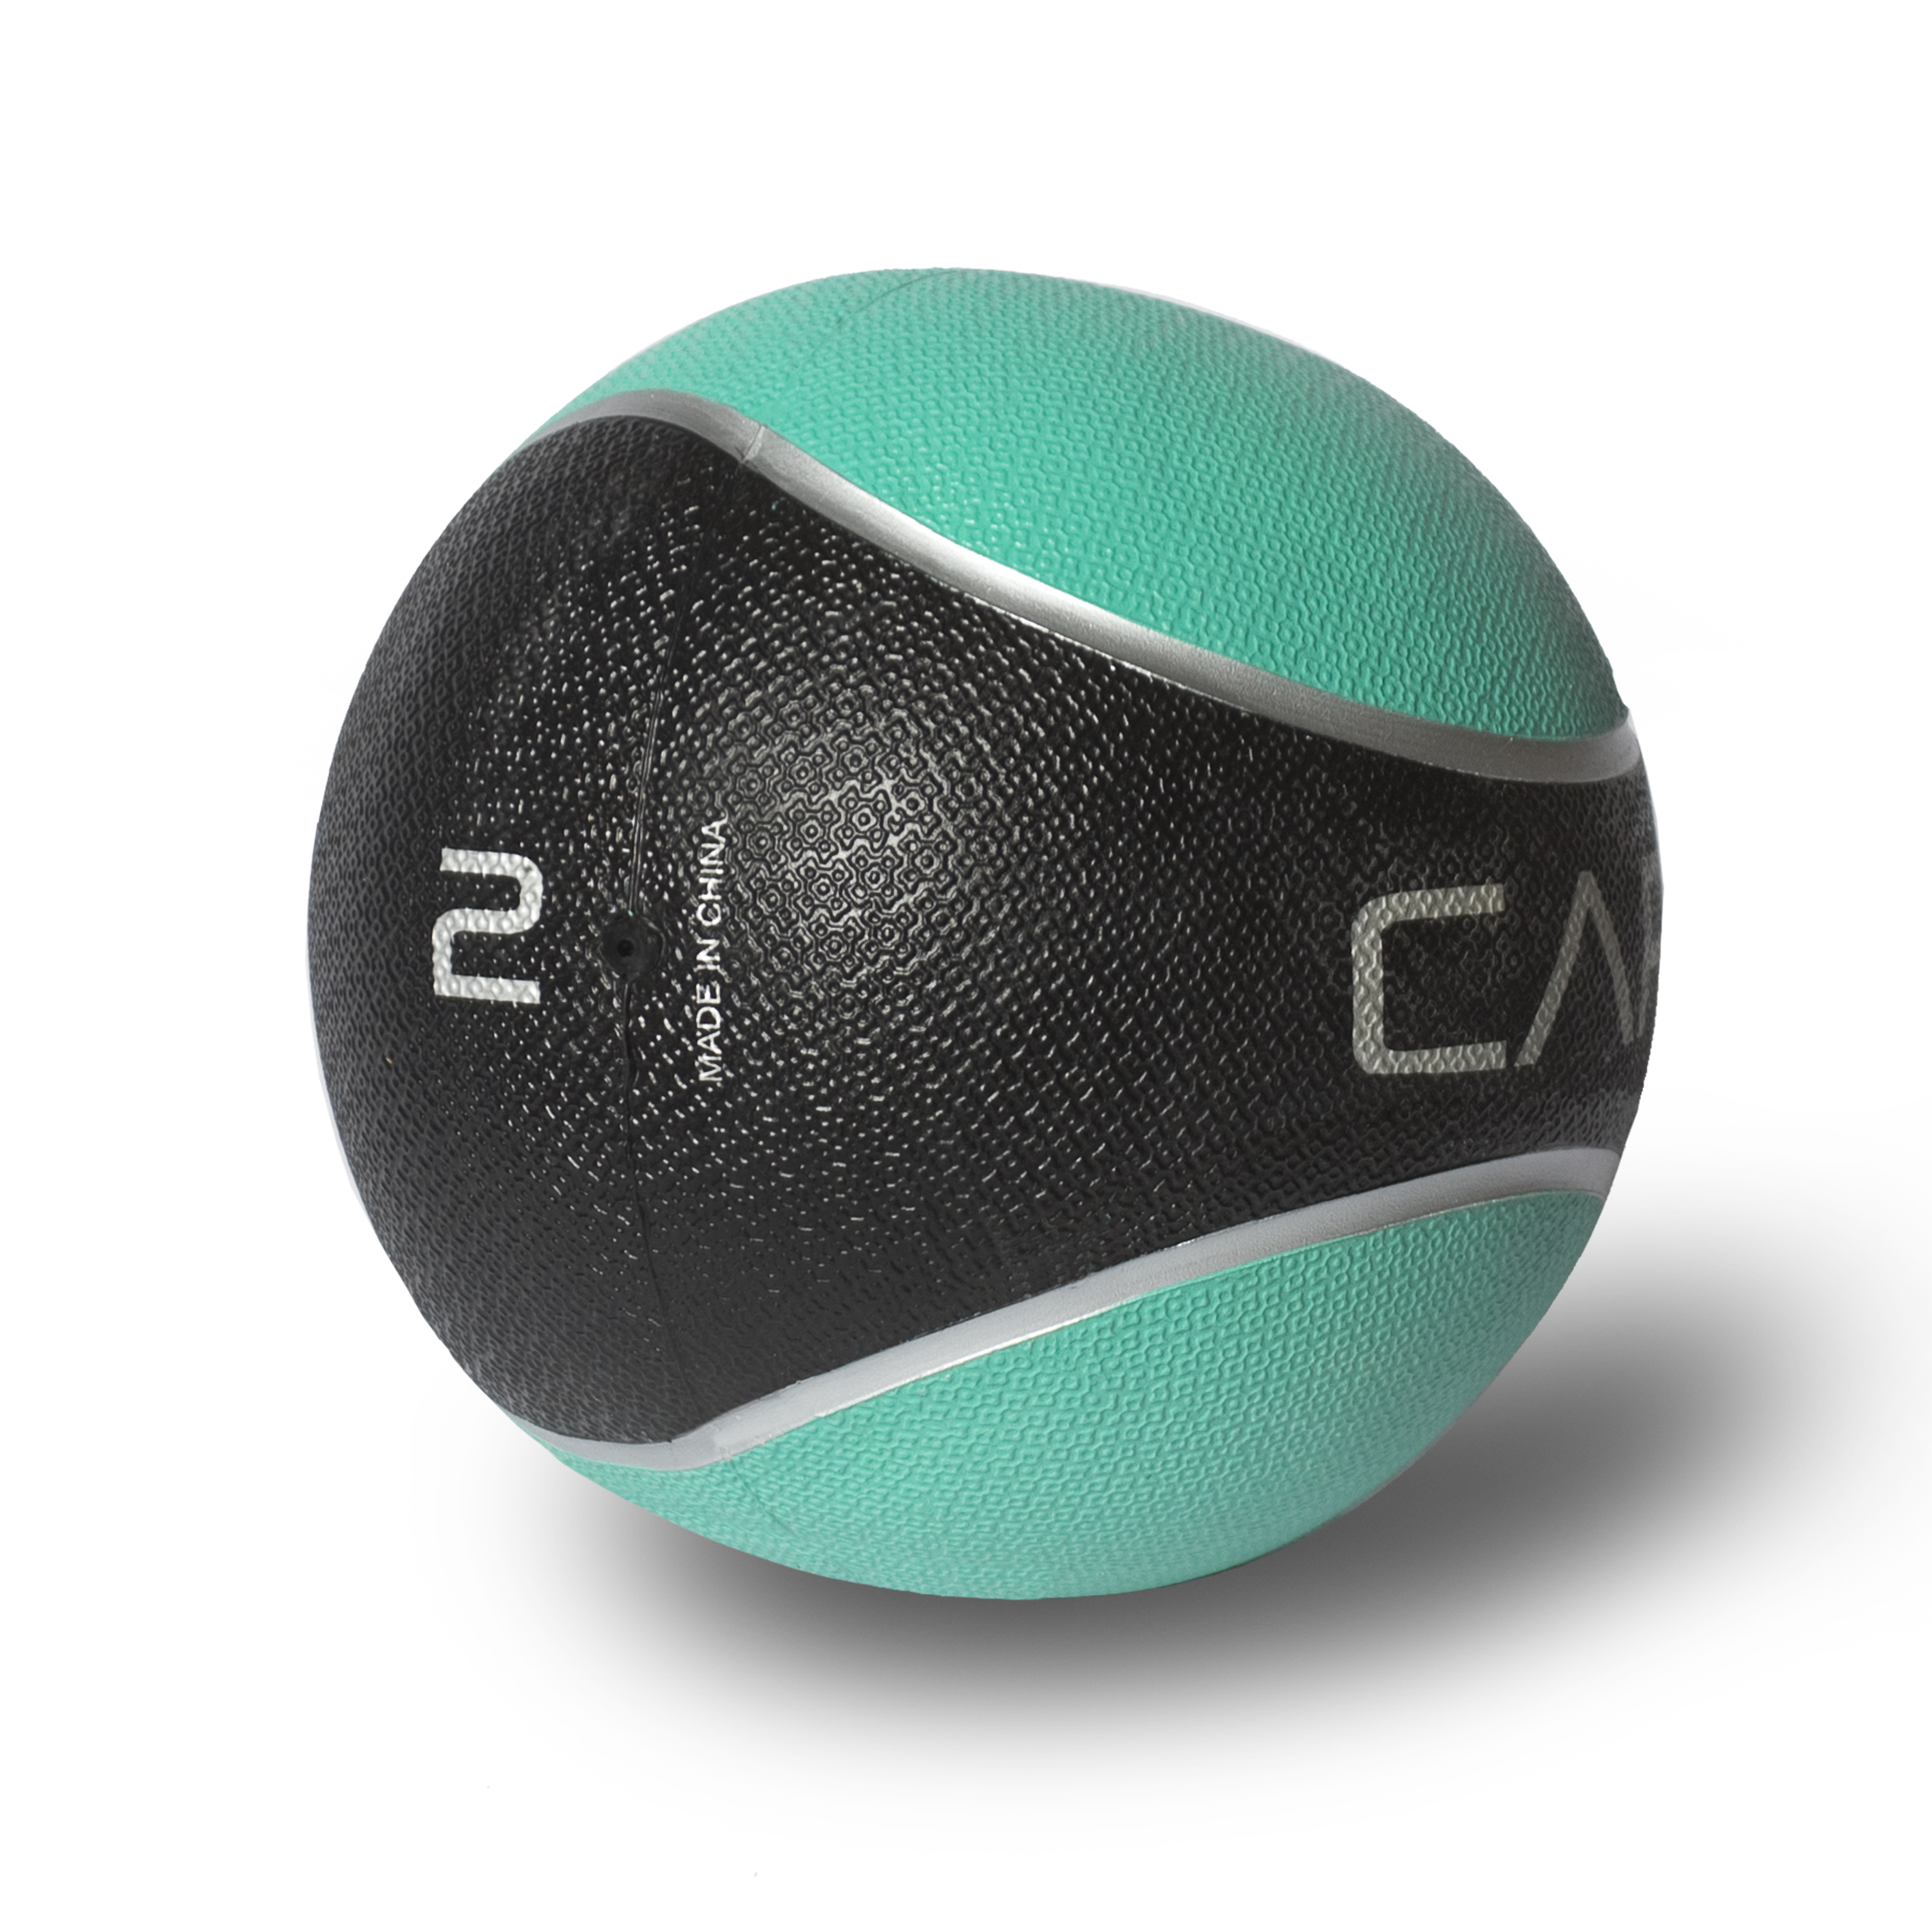 CAP Barbell Rubber Medicine Ball, 2lb - image 2 of 5